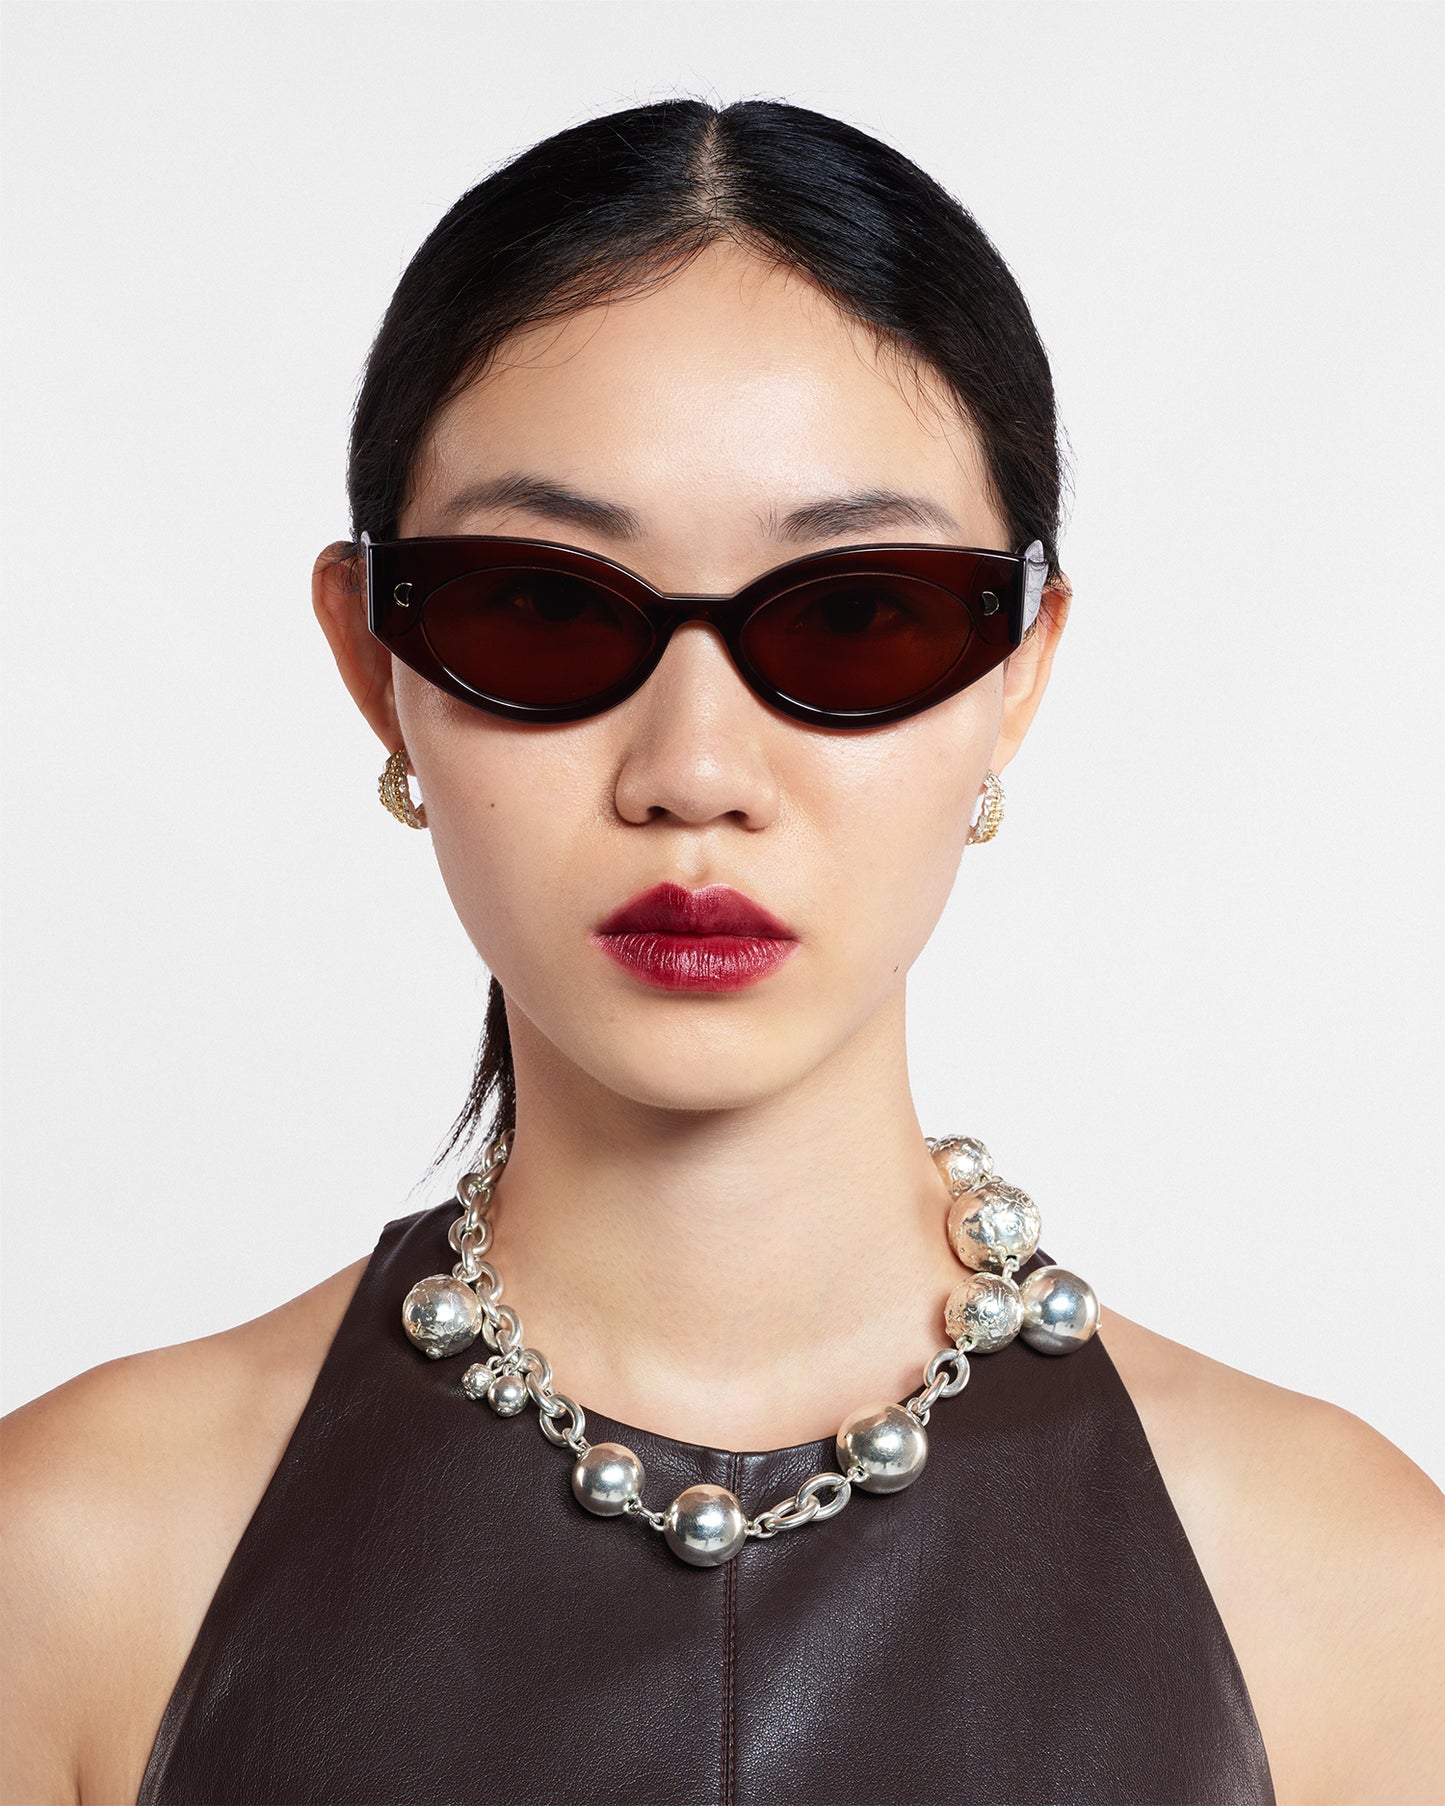 Azalea - Bio-Plastic Cat-Eye Sunglasses - Brown